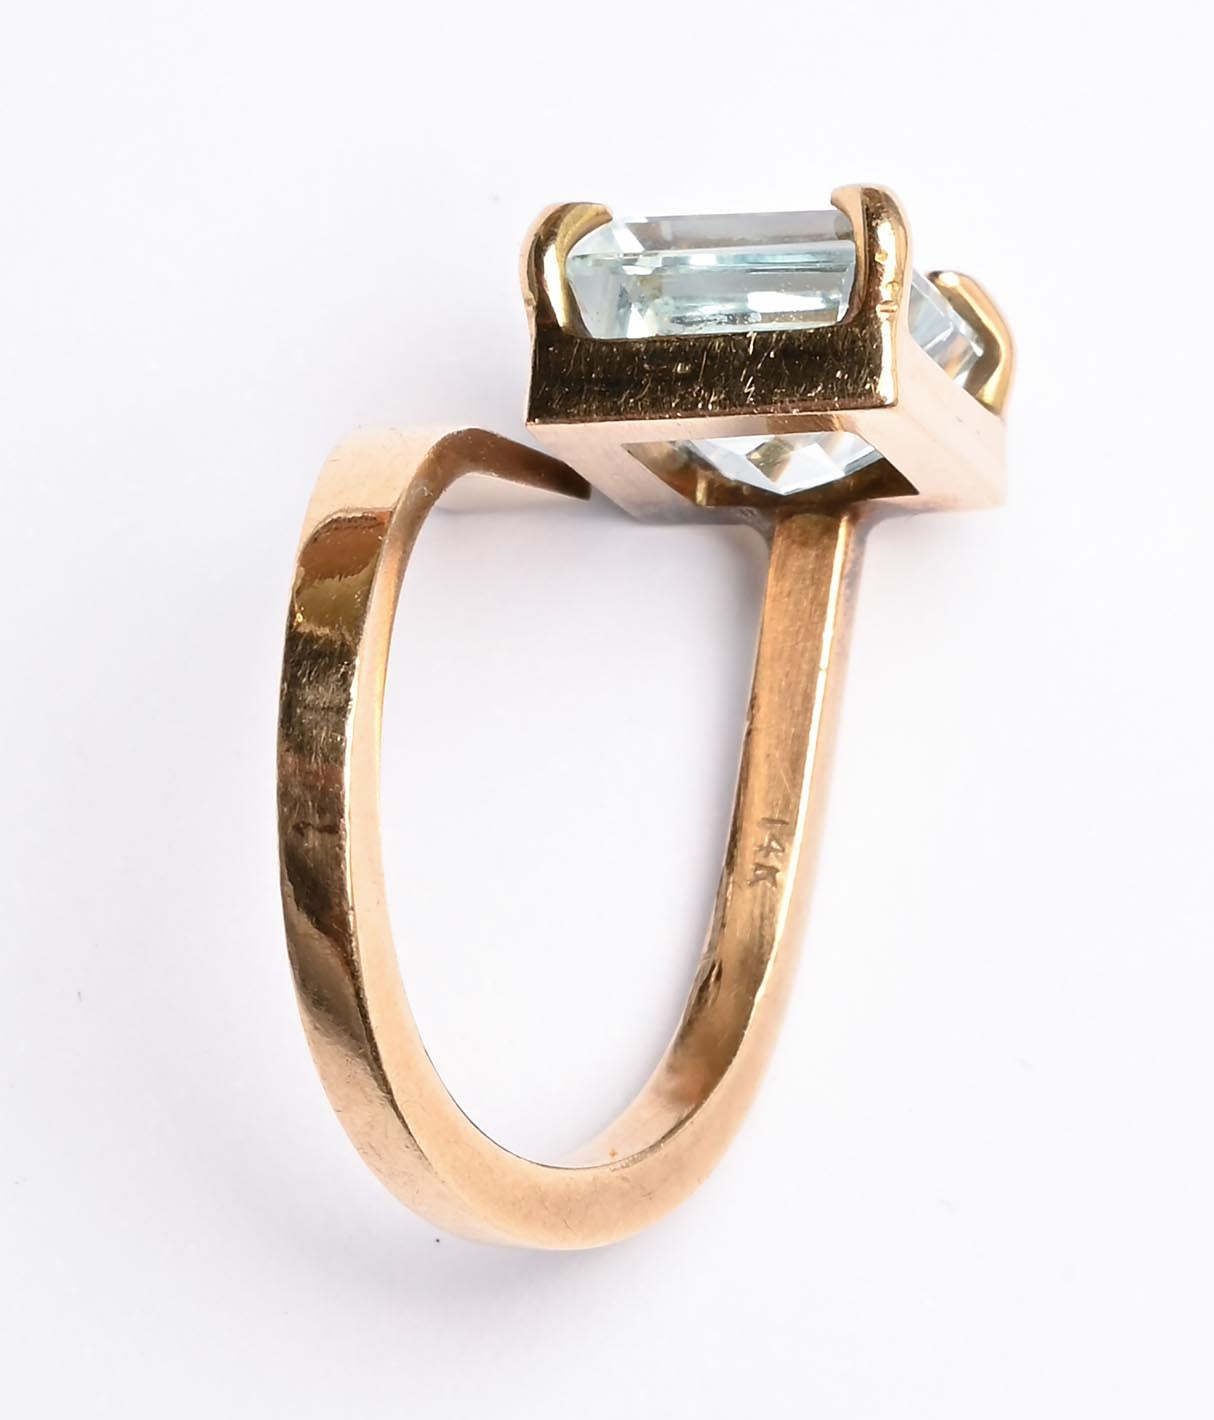 gold-and-aquamarine-ring-5-1457301